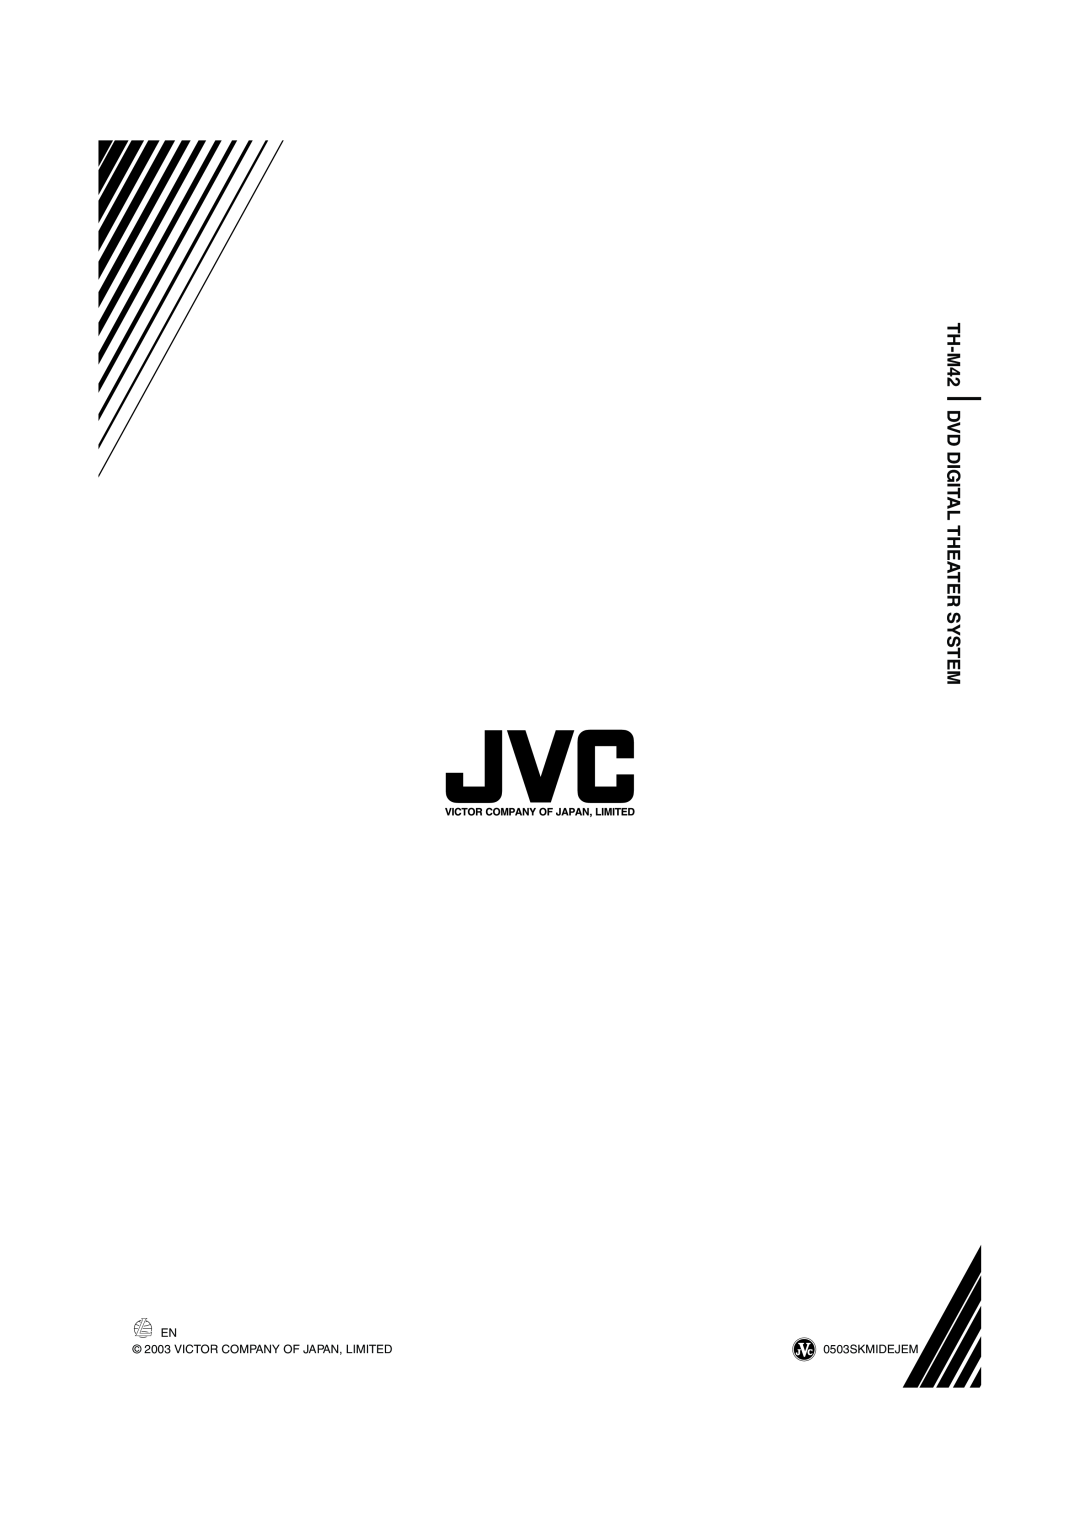 JVC manual TH-M42 DVD DIGITAL THEATER SYSTEM, Victor Company Of Japan, Limited, 0503SKMIDEJEM 